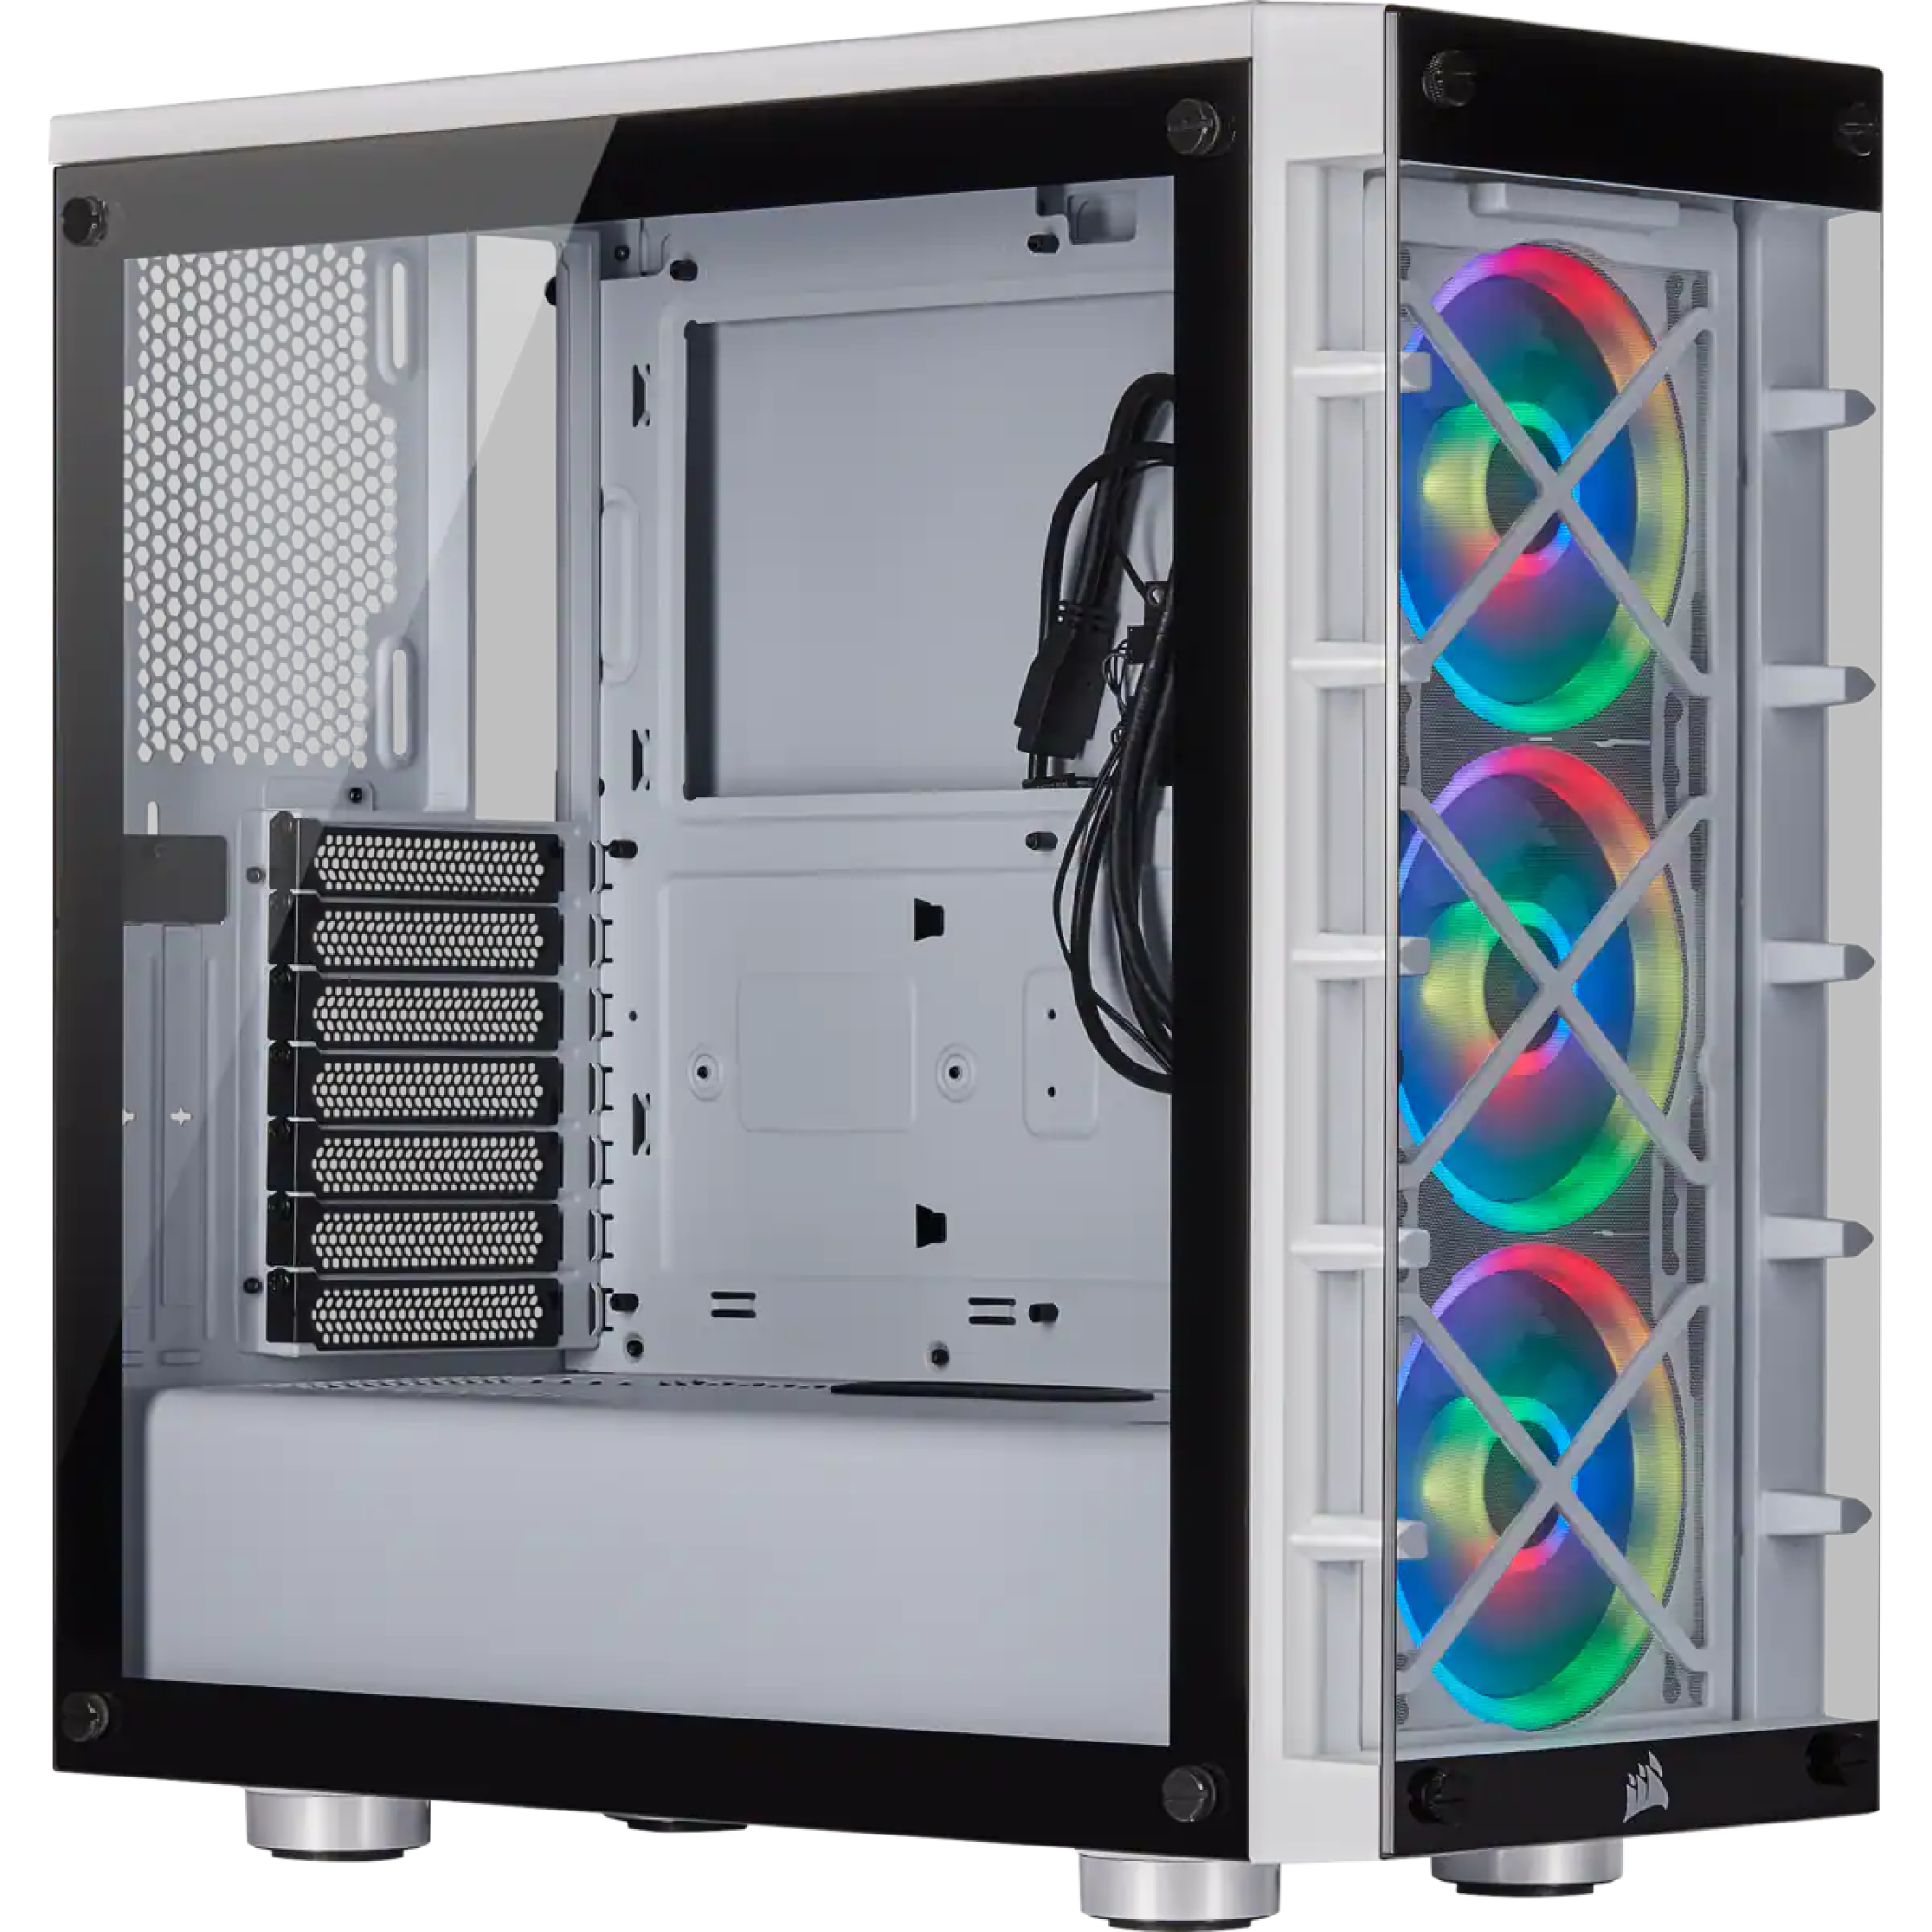 The Corsair iCUE 465X RGB PC case.